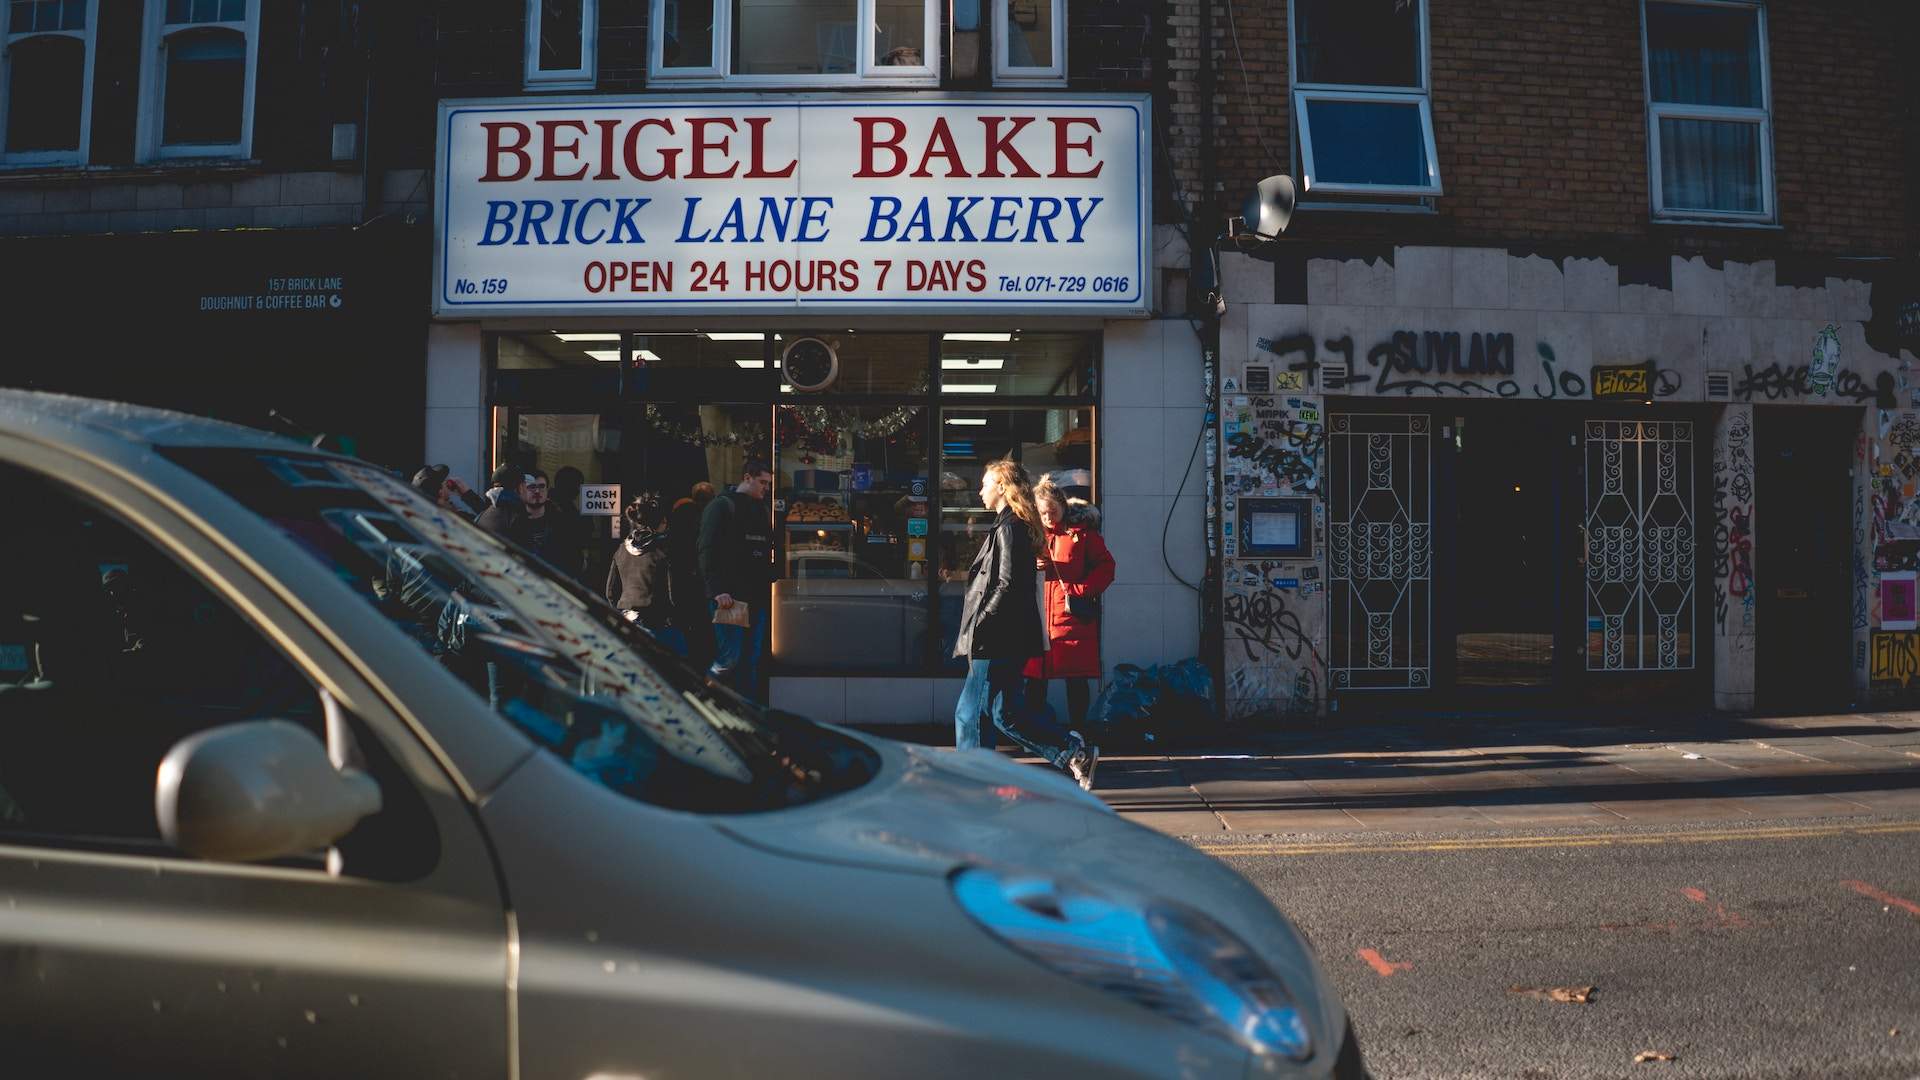 Beigel Bake Brick Lane Bakery